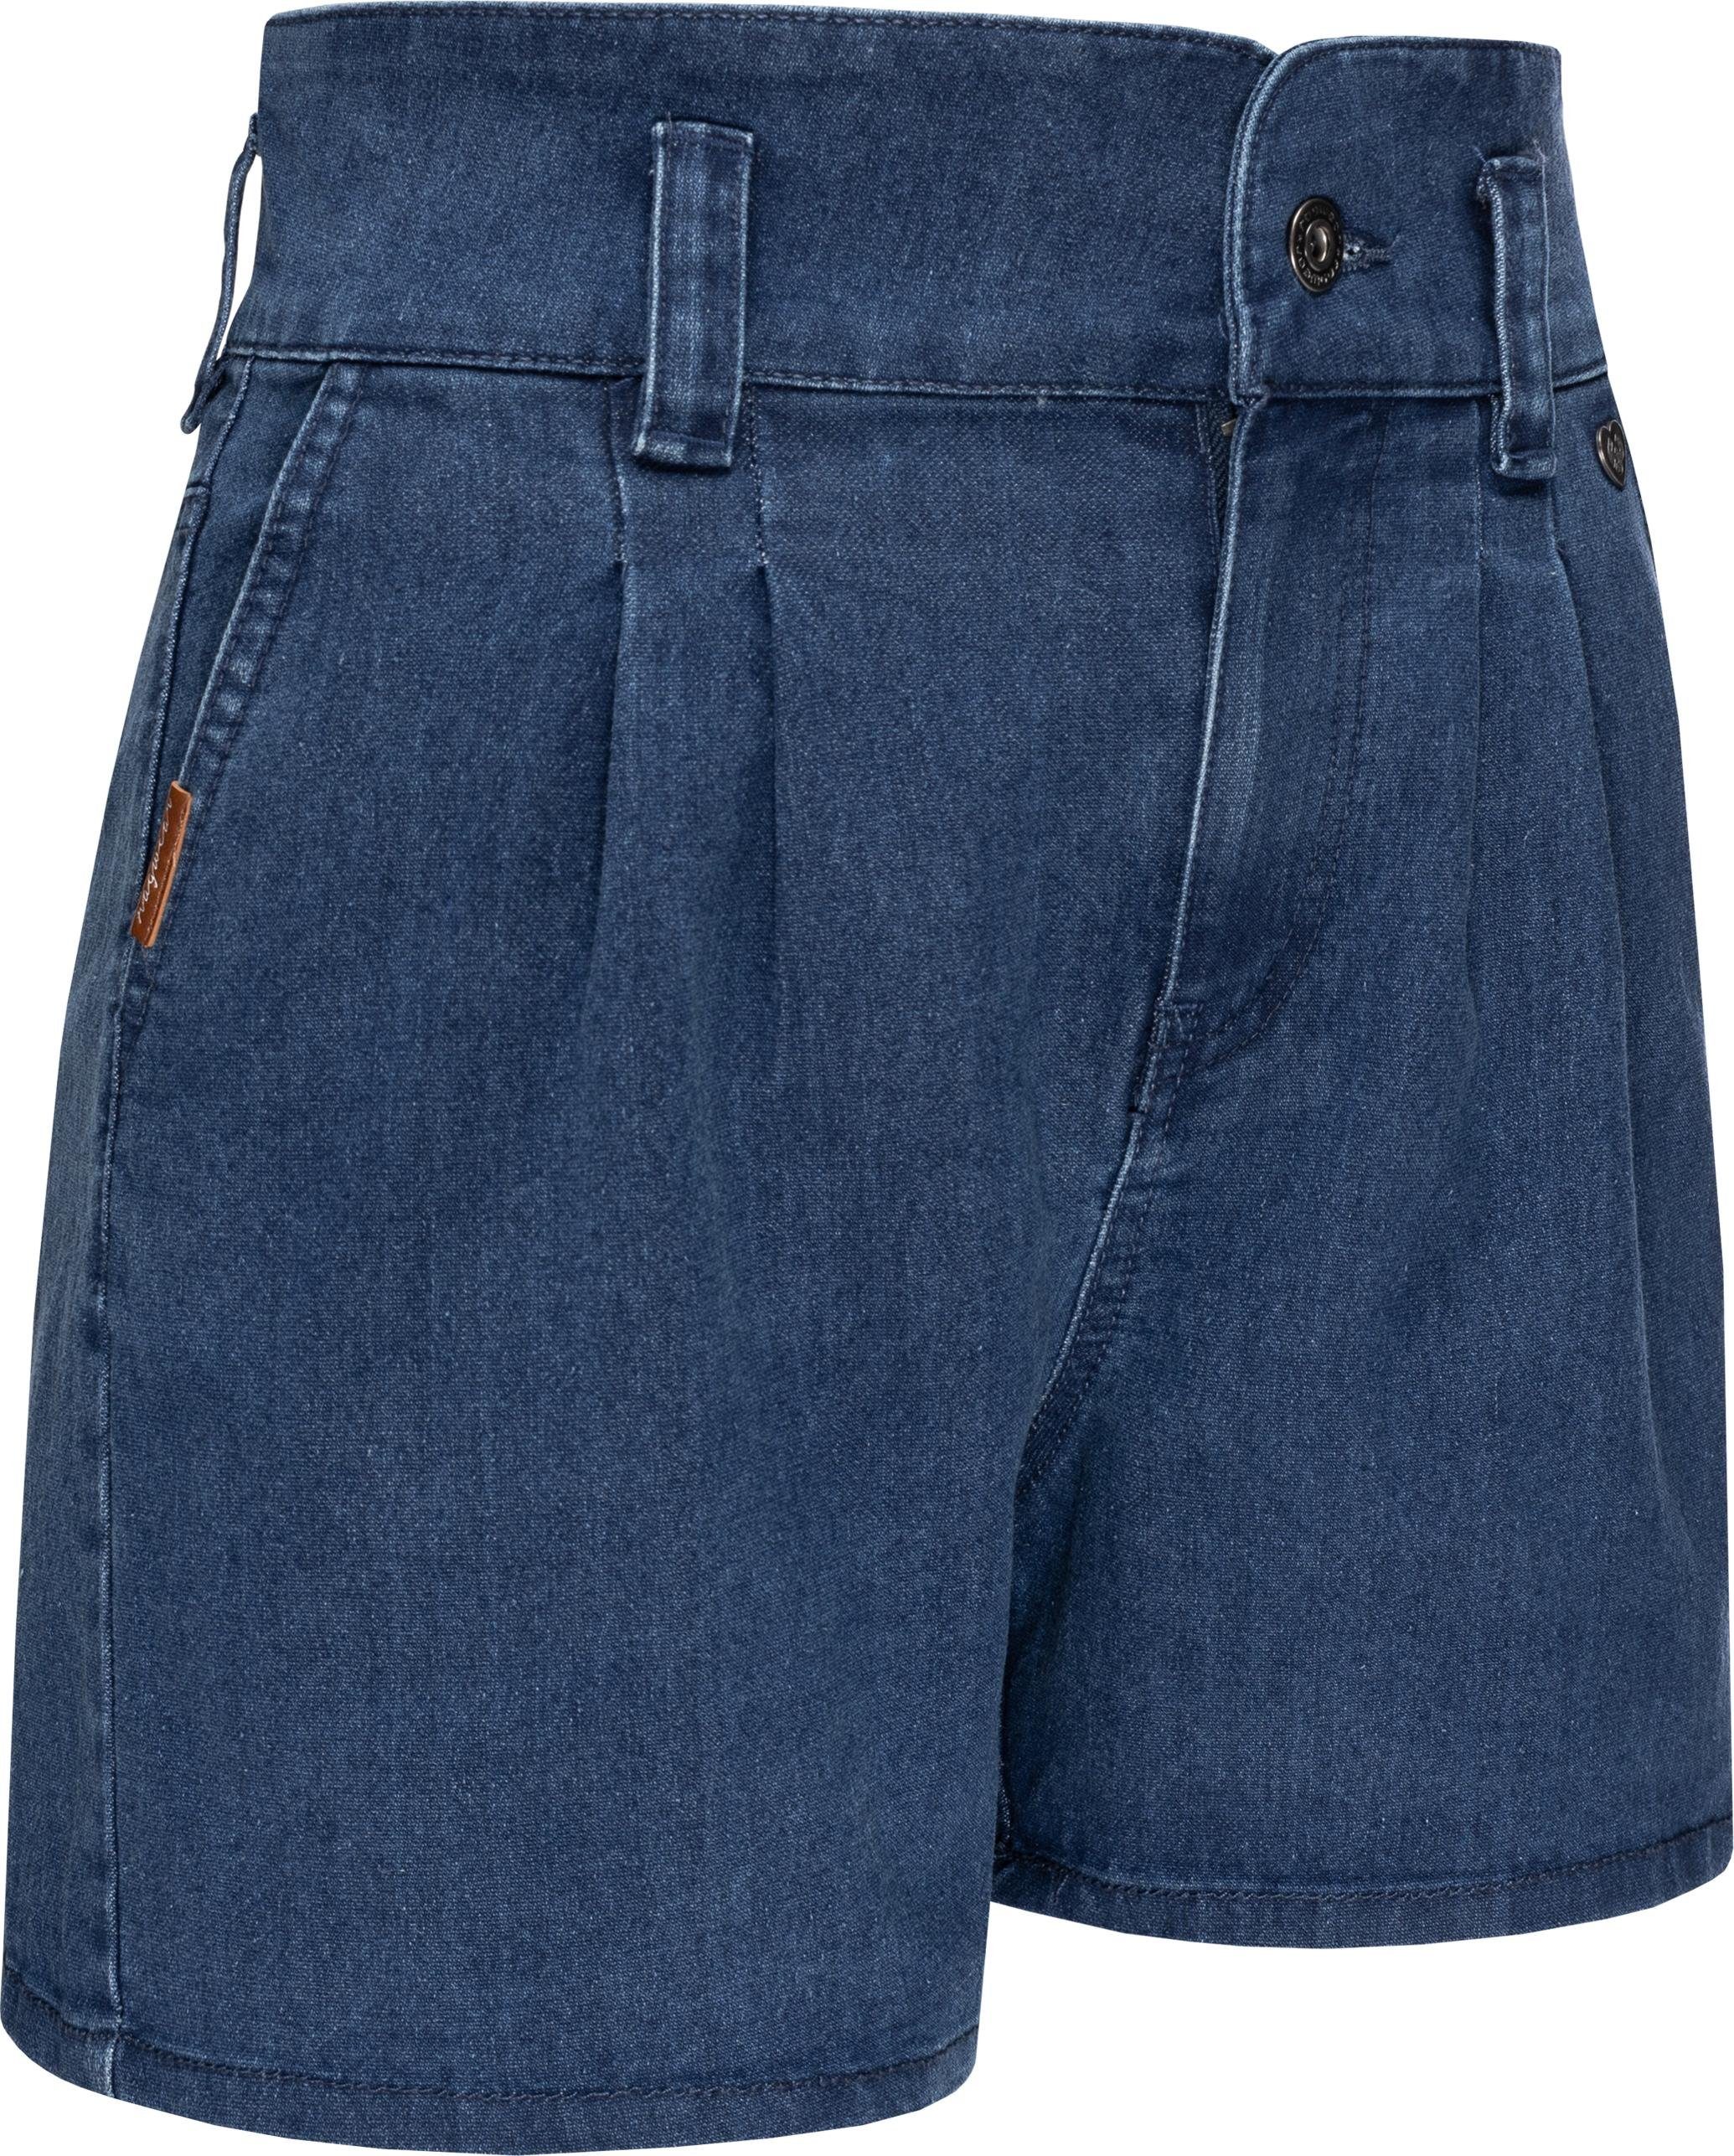 Ragwear Shorts in indigo Sommerhose Suzzie Jeansoptik kurze stylische,